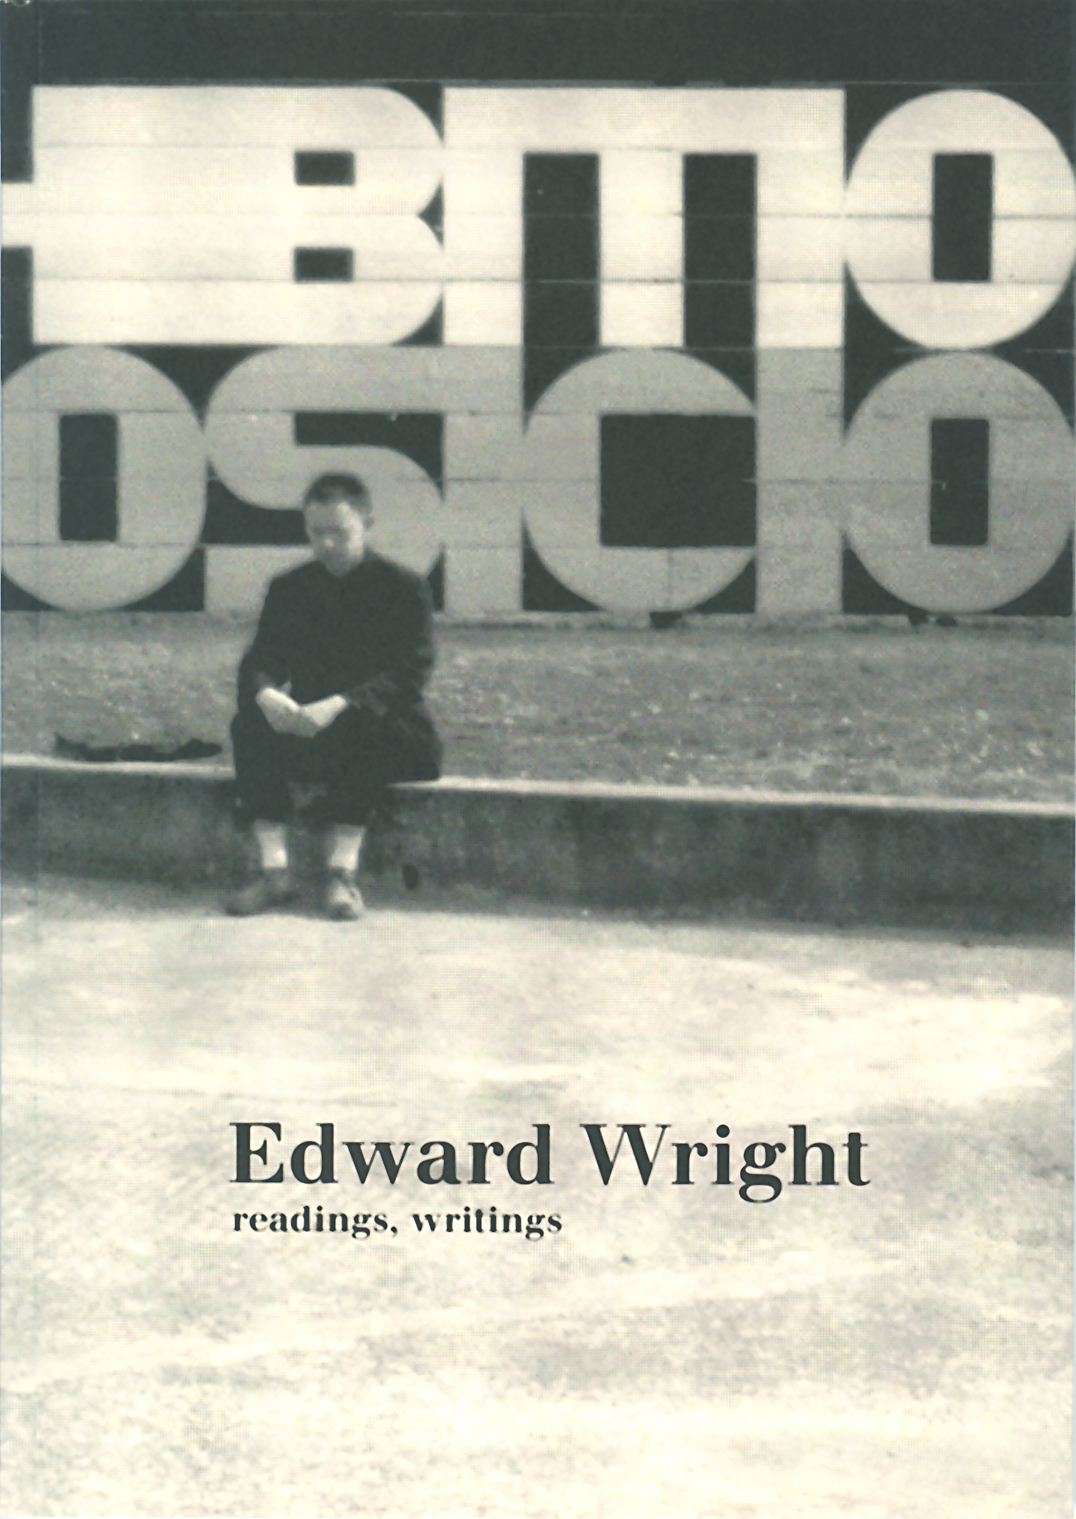 Edward Wright: readings, writings